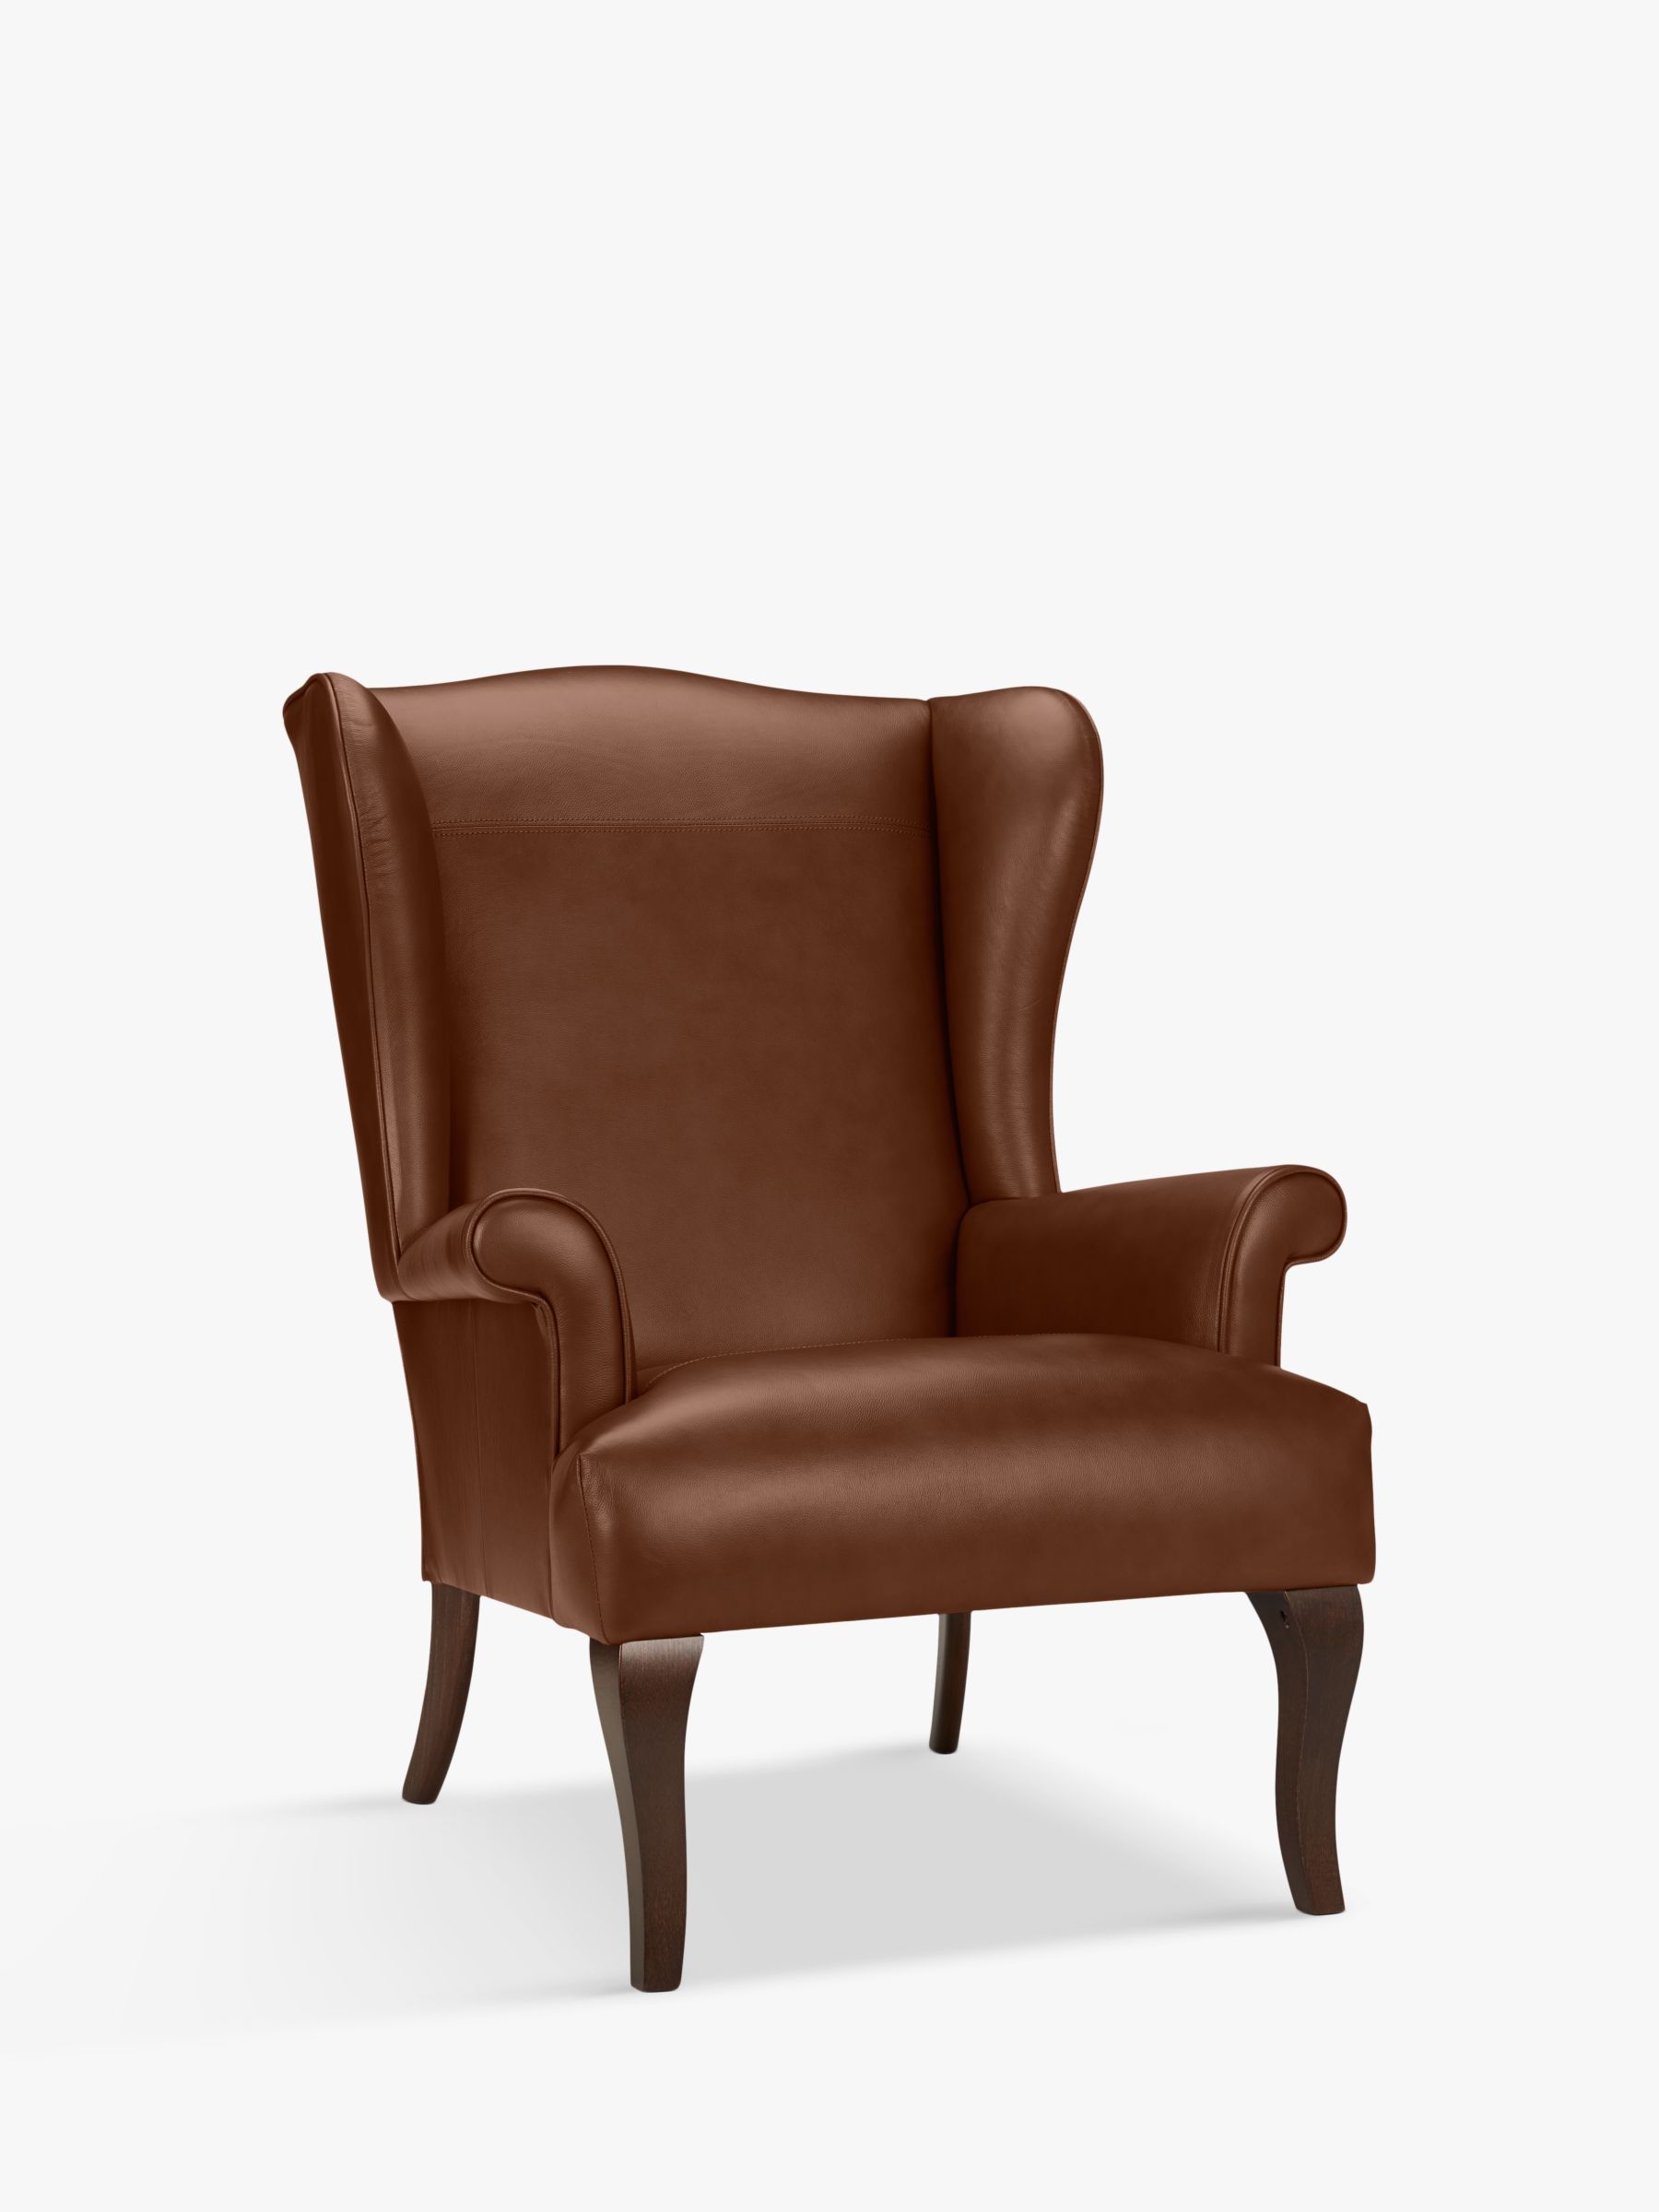 John Lewis Shaftesbury Leather Wing Chair, Dark Leg